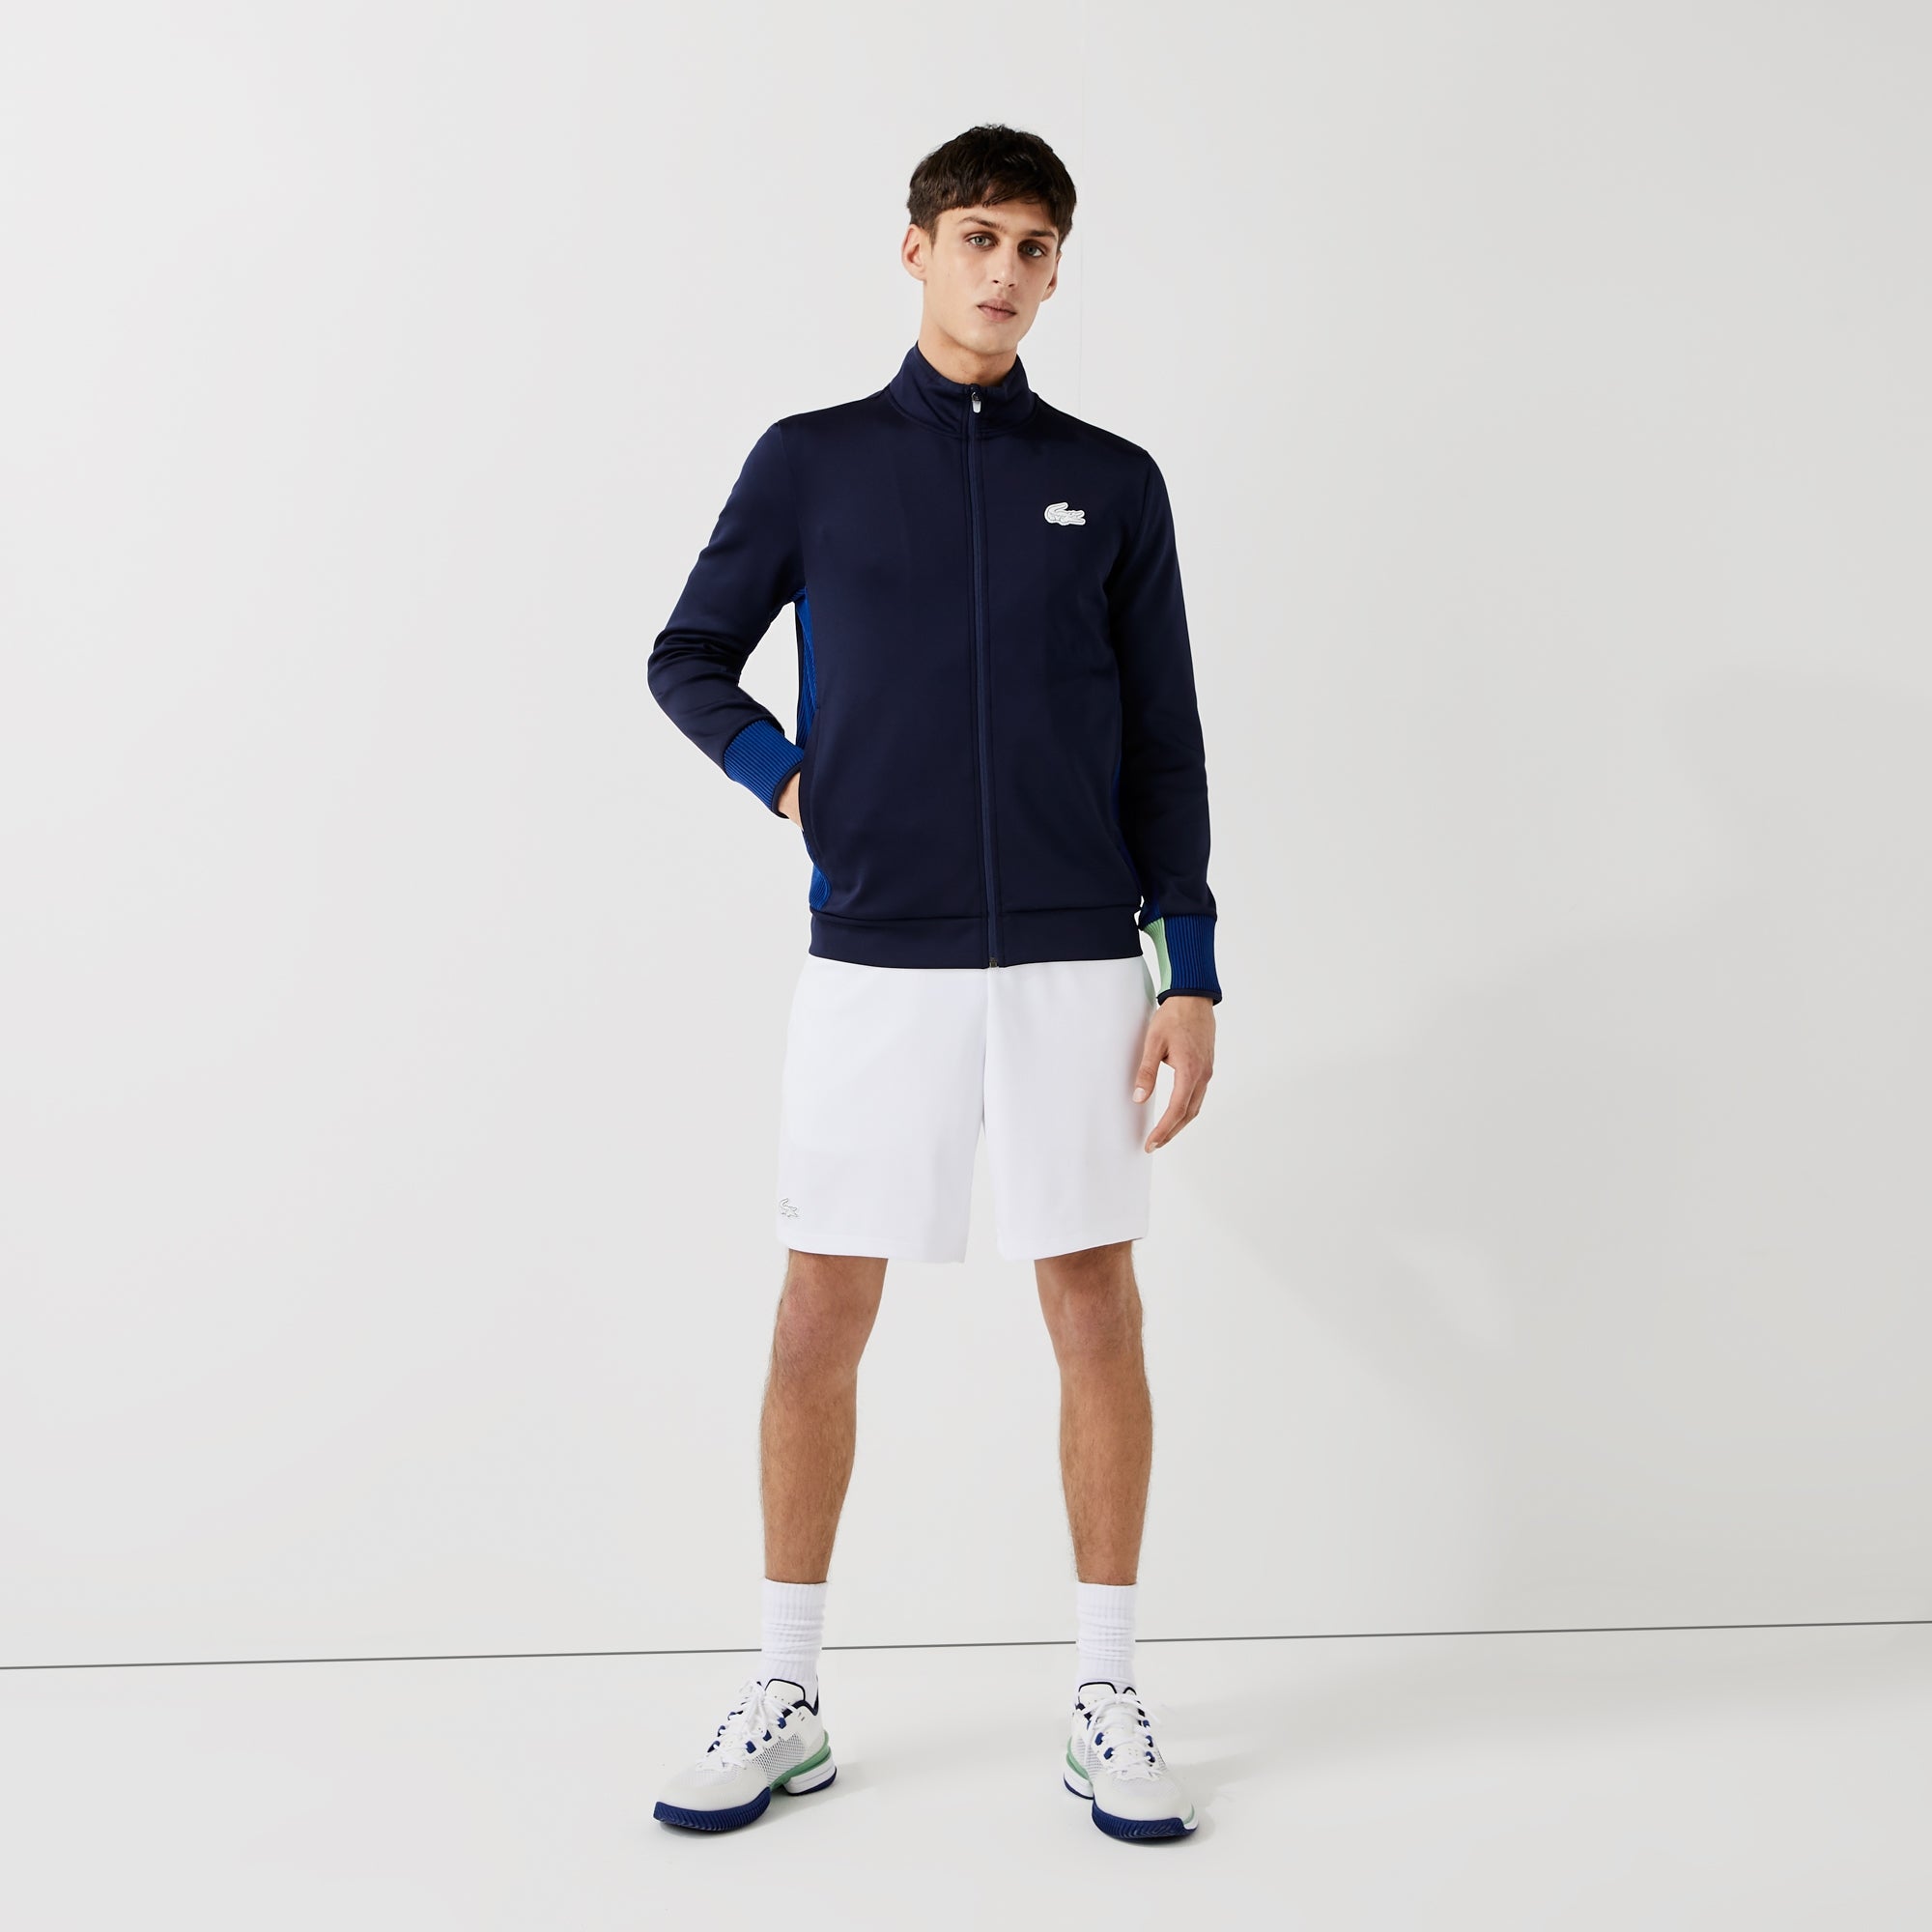 Lacoste Men's Tennis Jacket Blue (3)